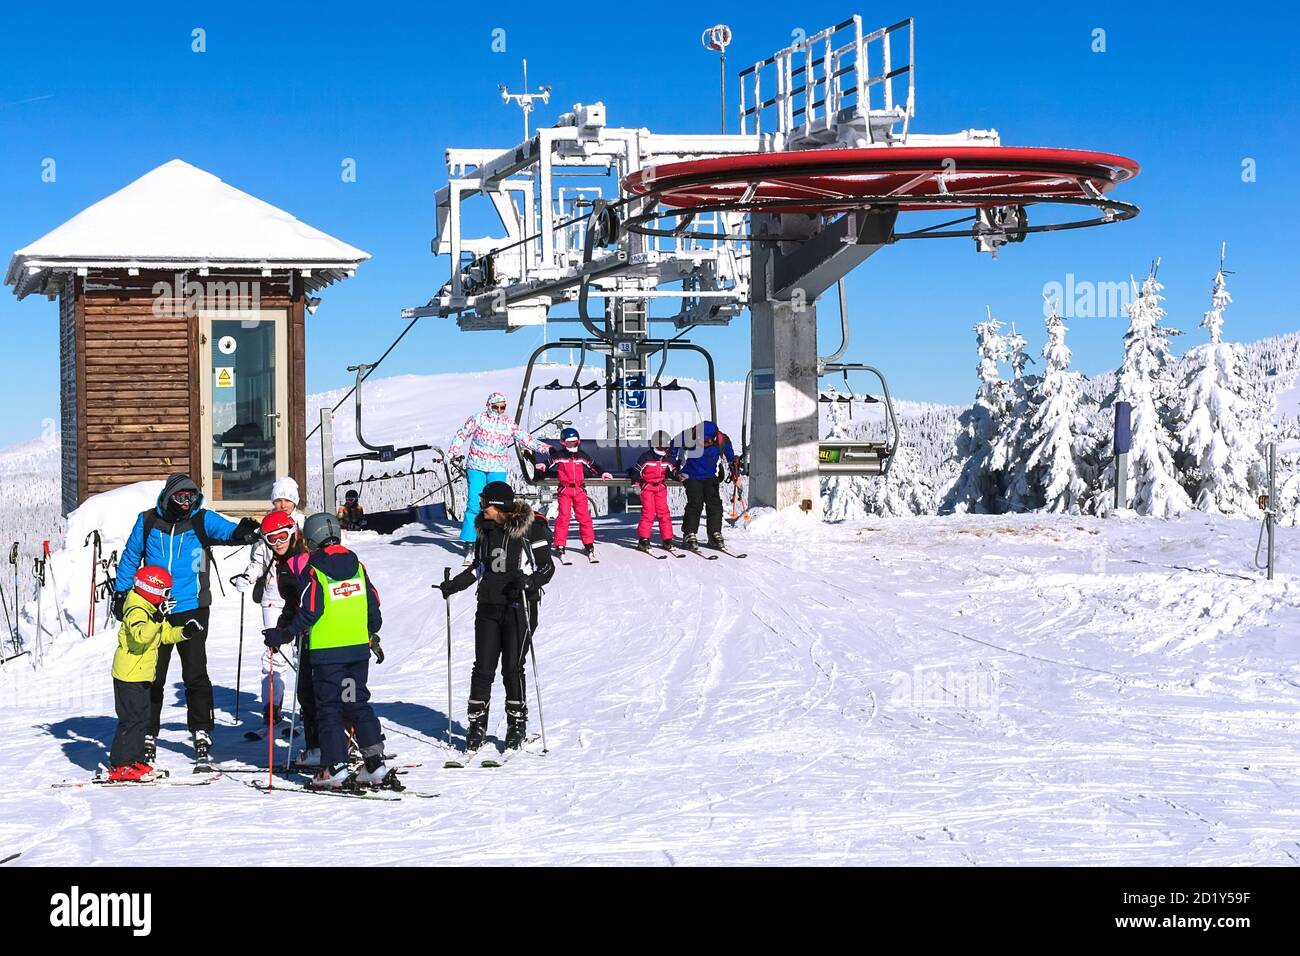 Kopaonik, Serbia - January 22, 2016: Ski resort and chair lift, slope view and skiers Stock Photo